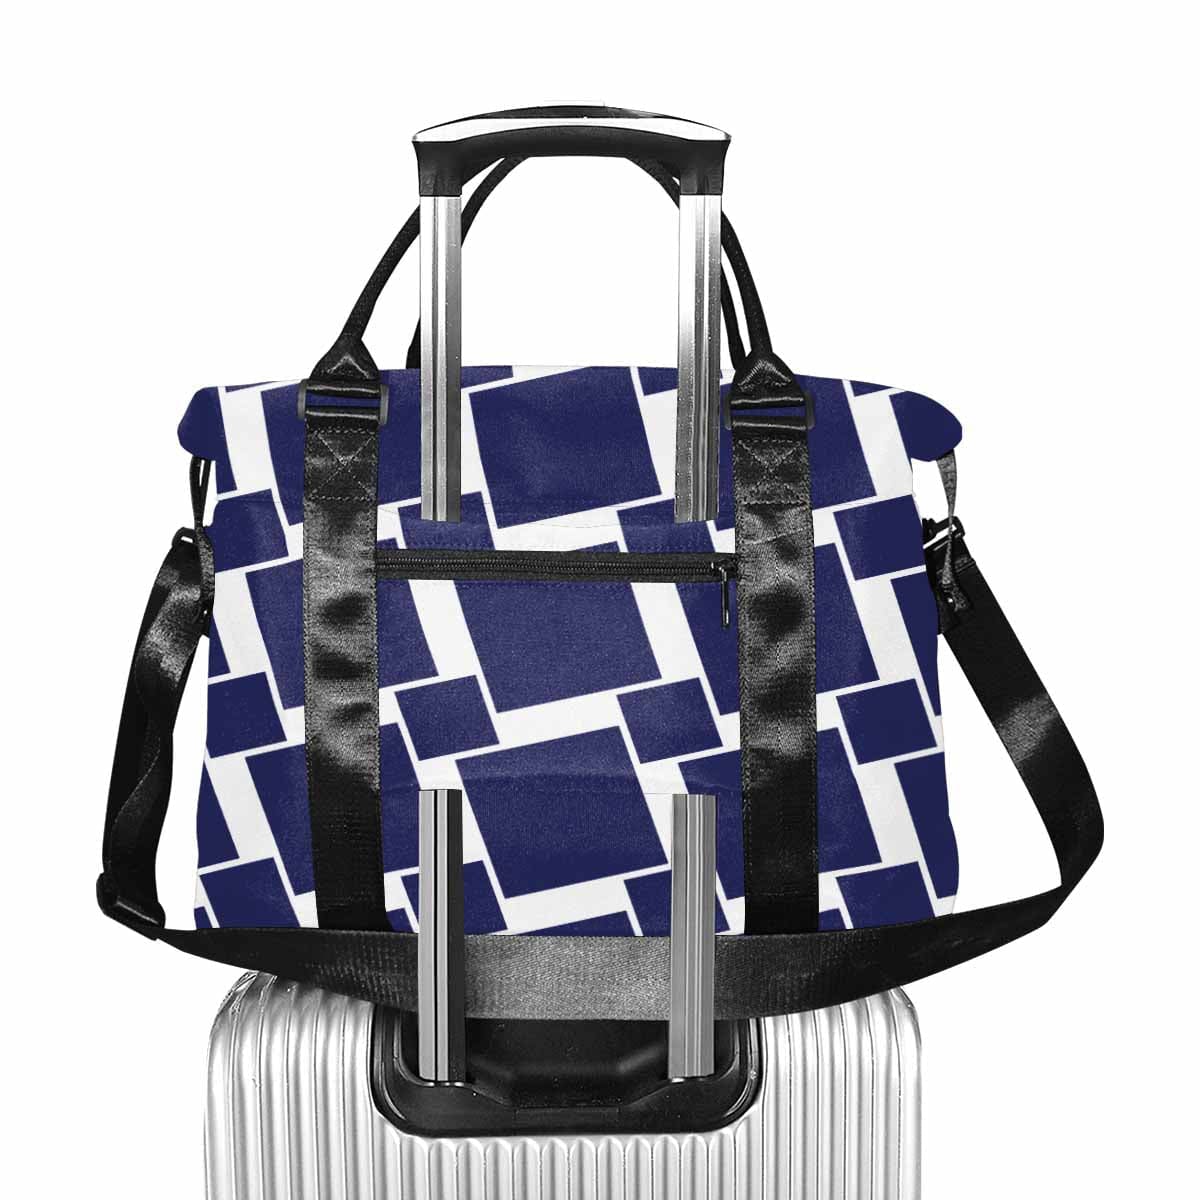 Duffle Bag - Large Capacity - Dark Purple - Bags | Travel Bags | Canvas Carry